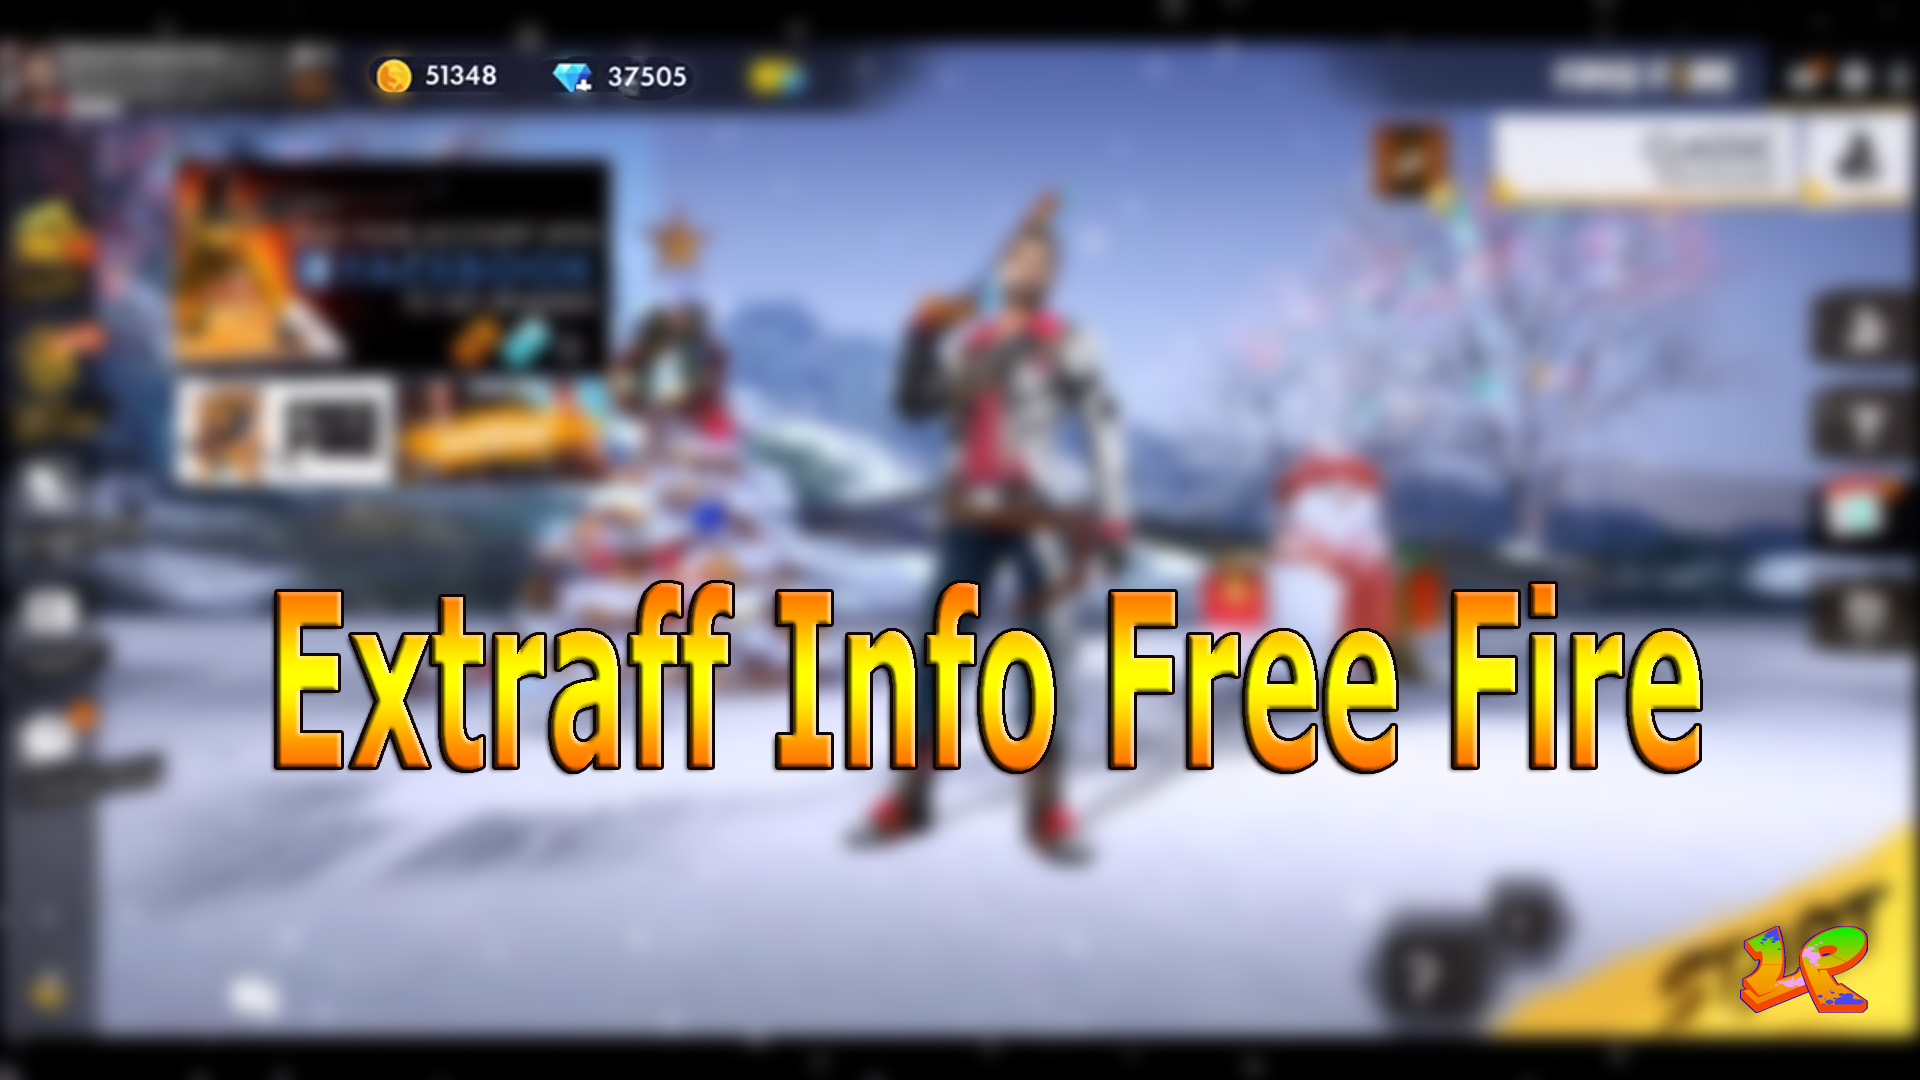 Extraff info free fire